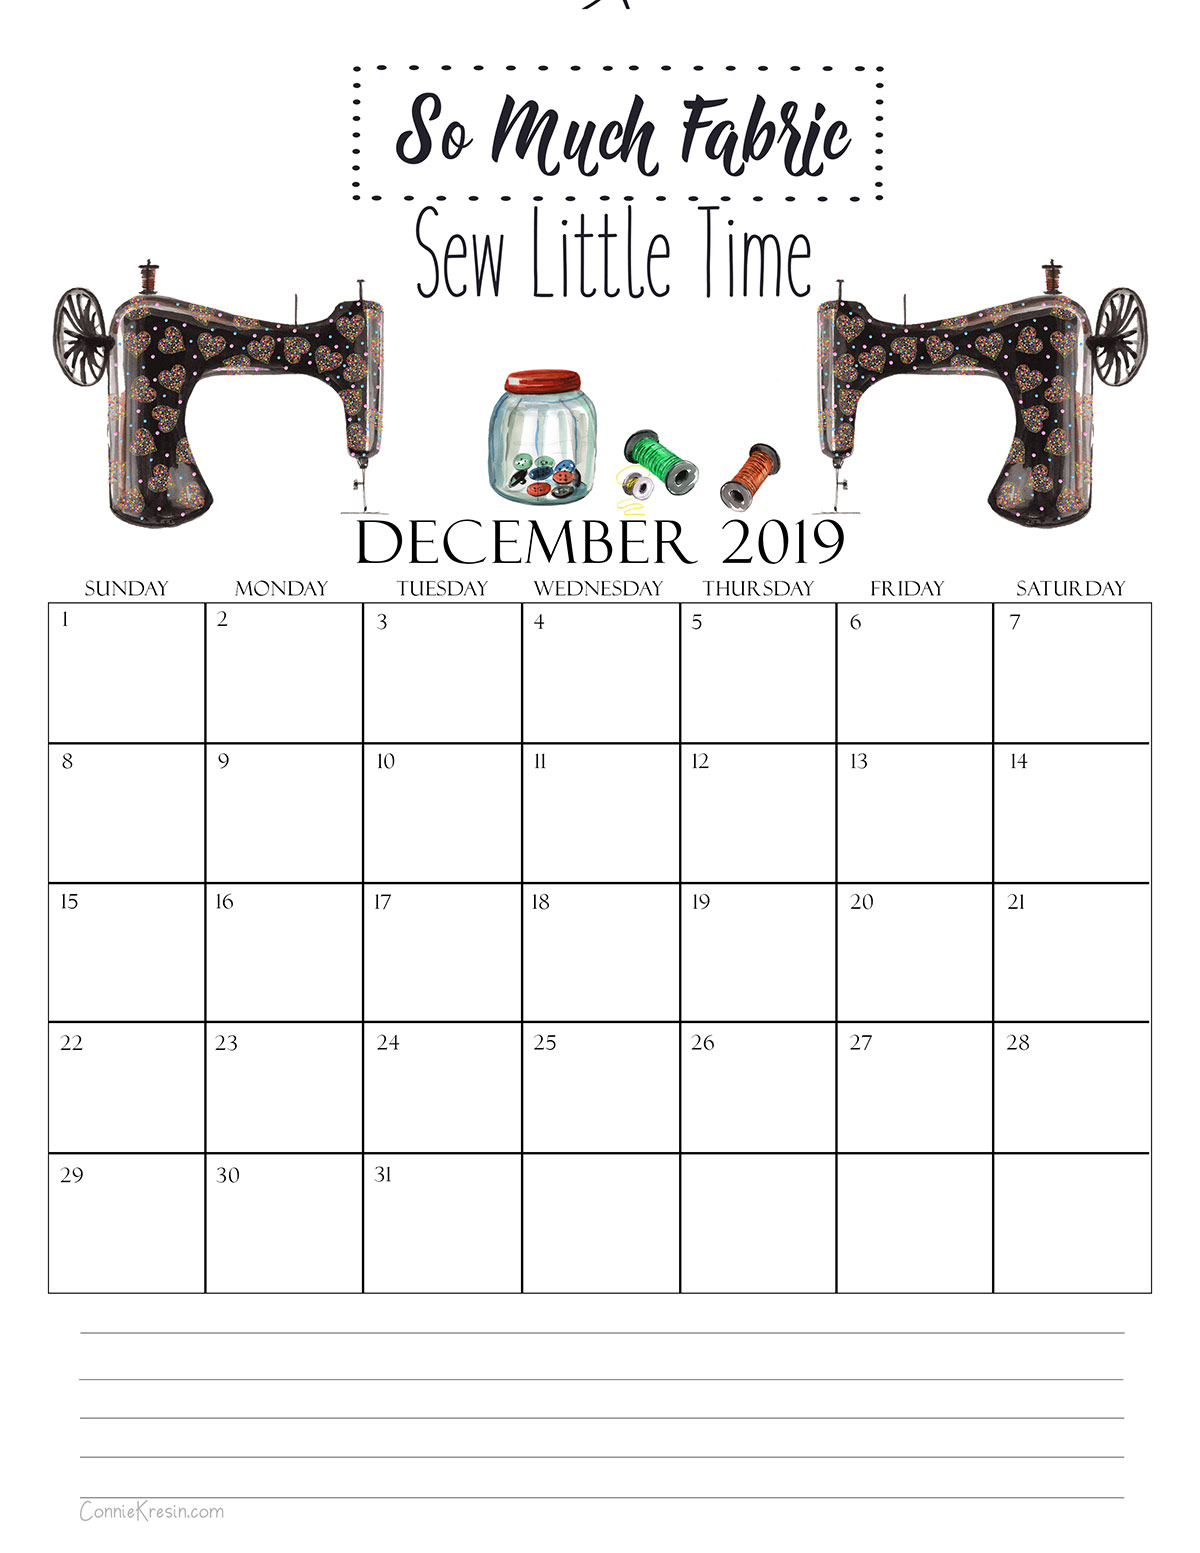 Vintage sewing machines on December calendar